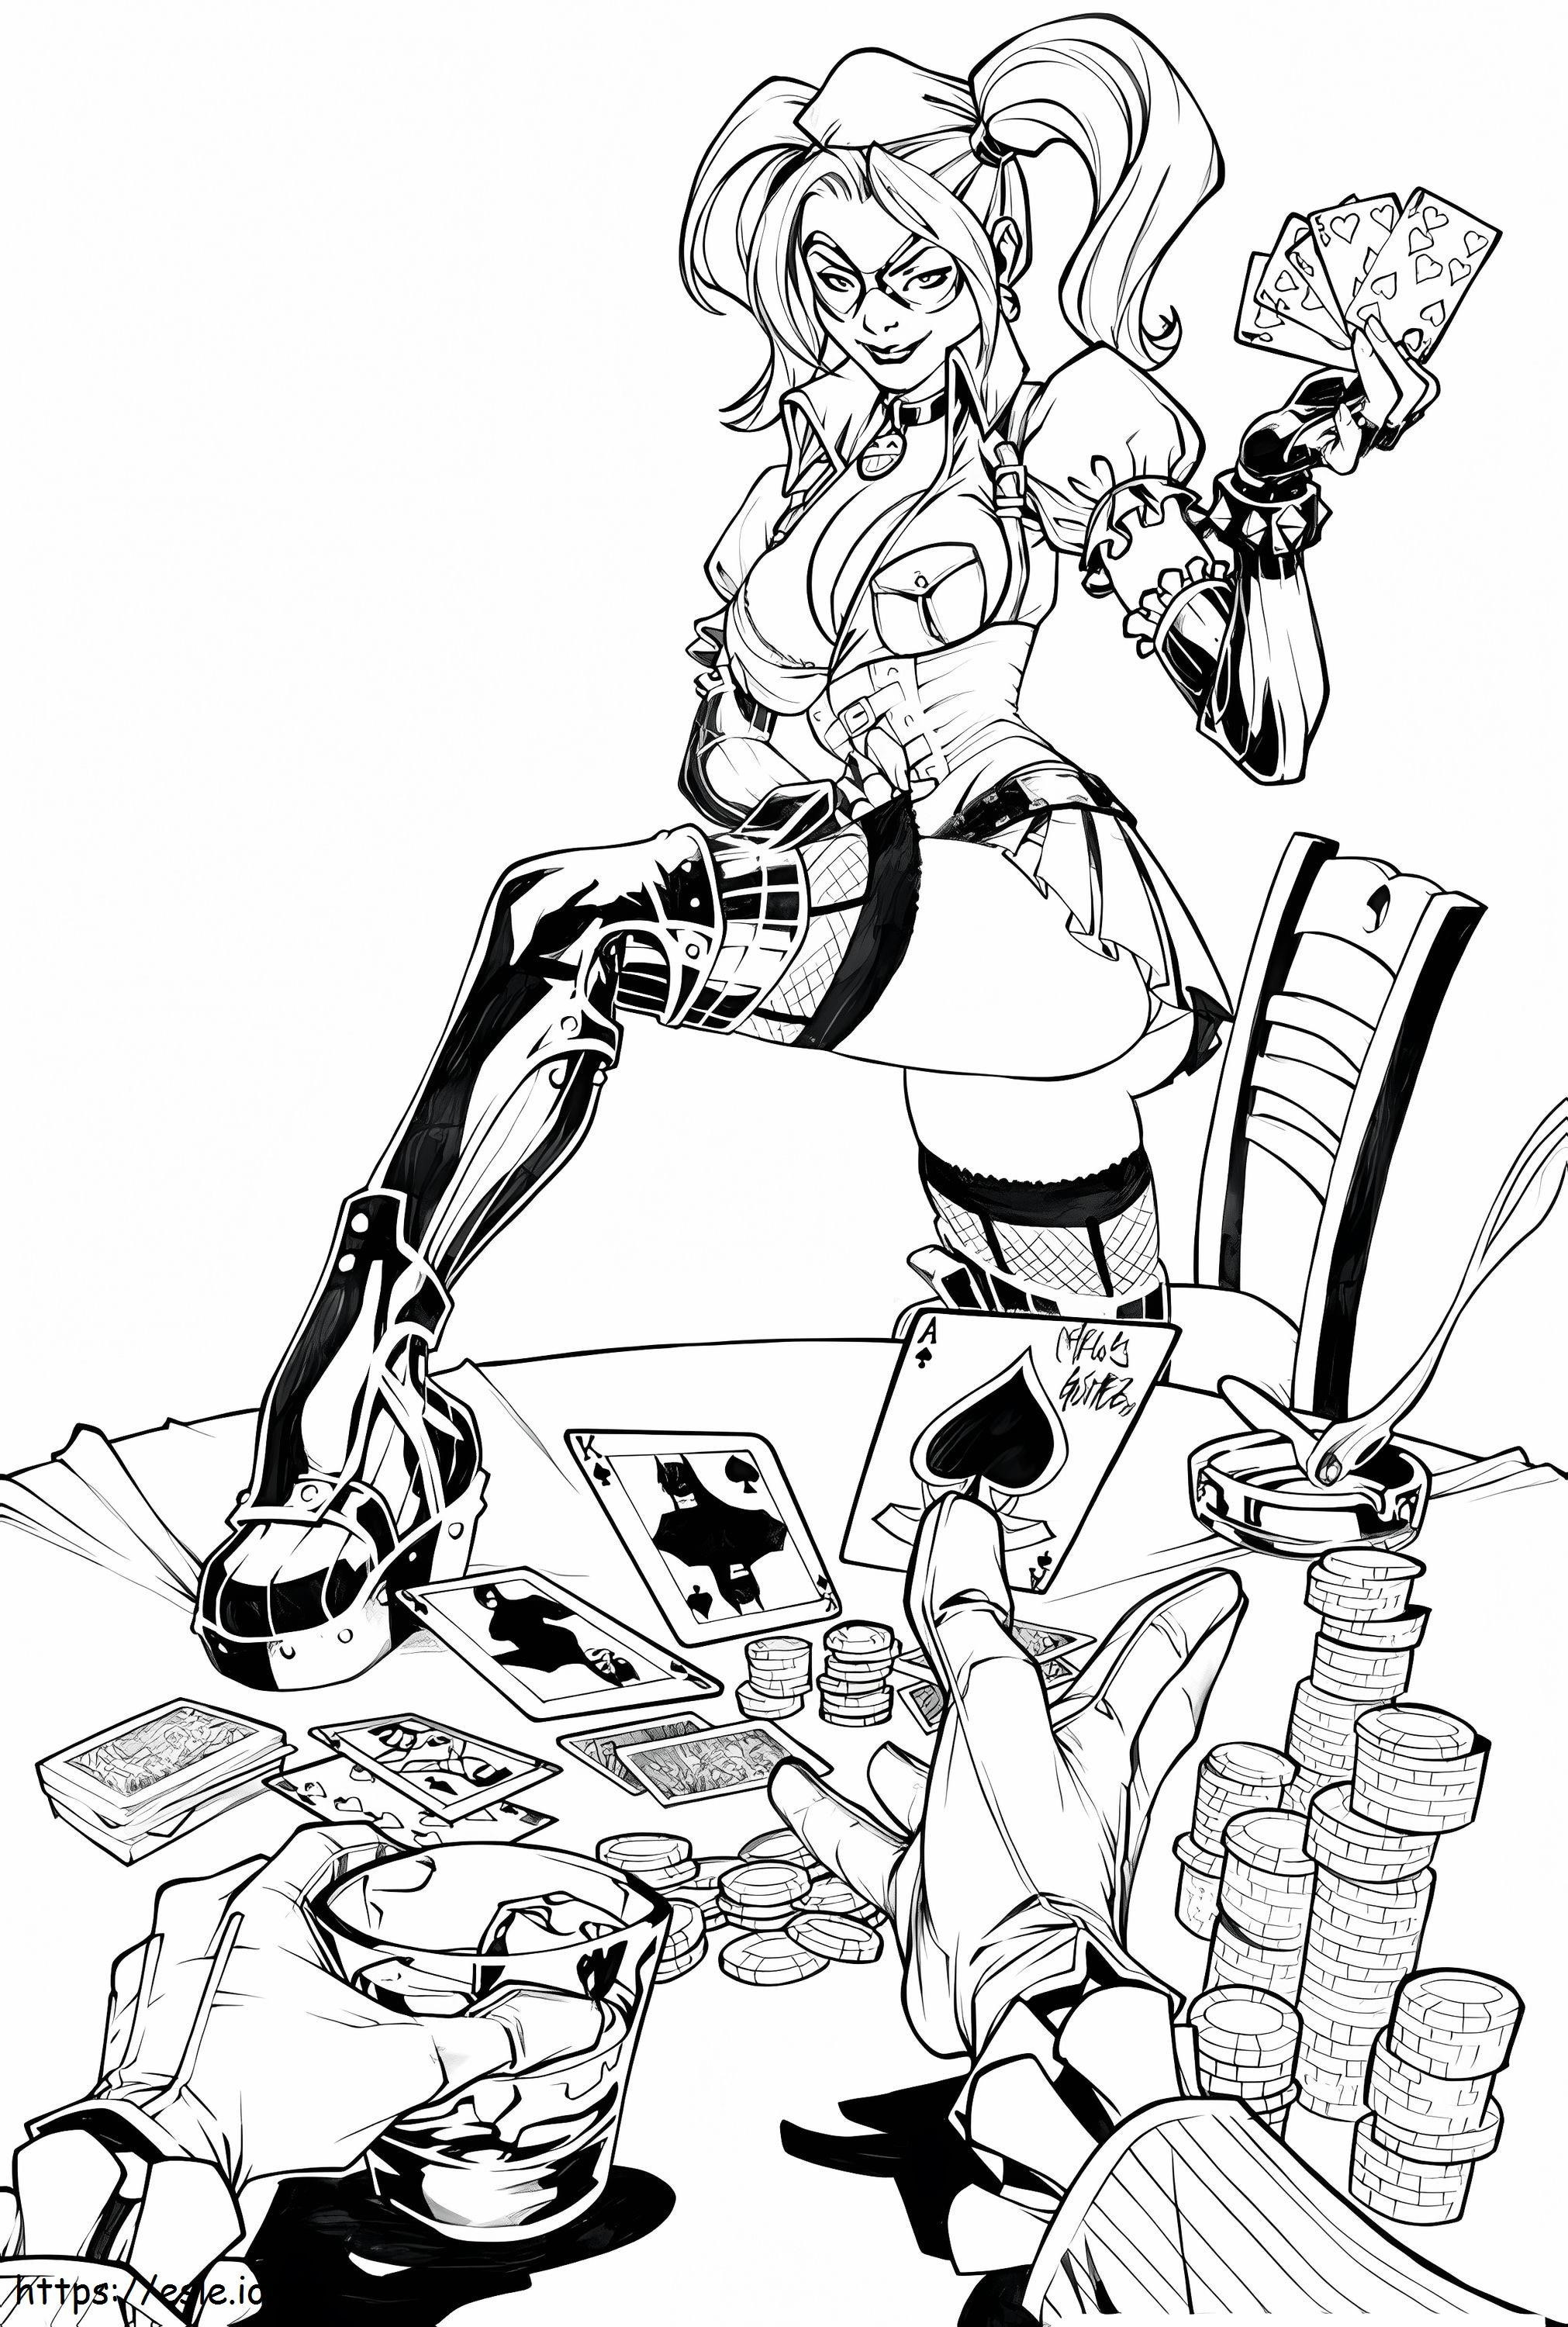 Harley Quinn gra w karty kolorowanka